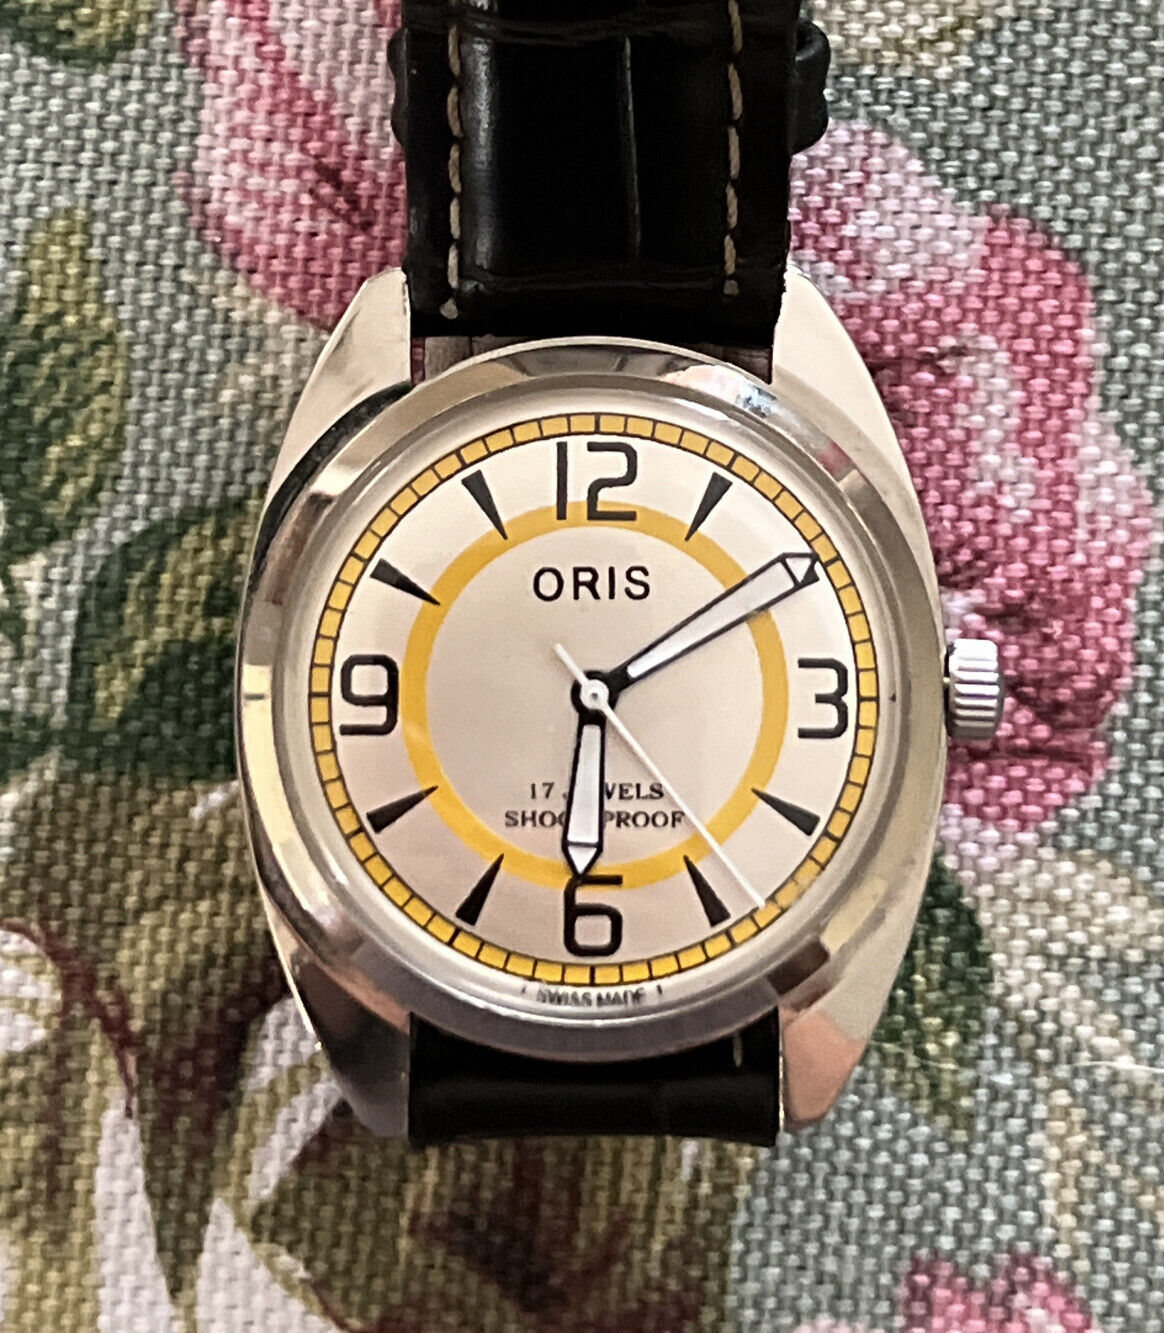 Vintage Oris 17 Jewel Swiss Watch, Mechanical, Great Condition, Running